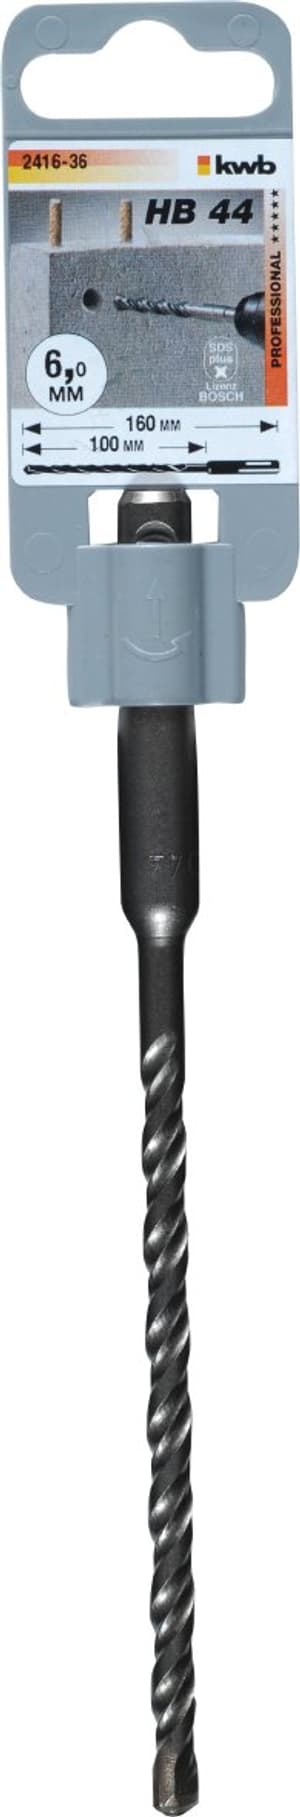 HB 44 SDS plus Punte per martello, 160/100 mm, ø 6 mm